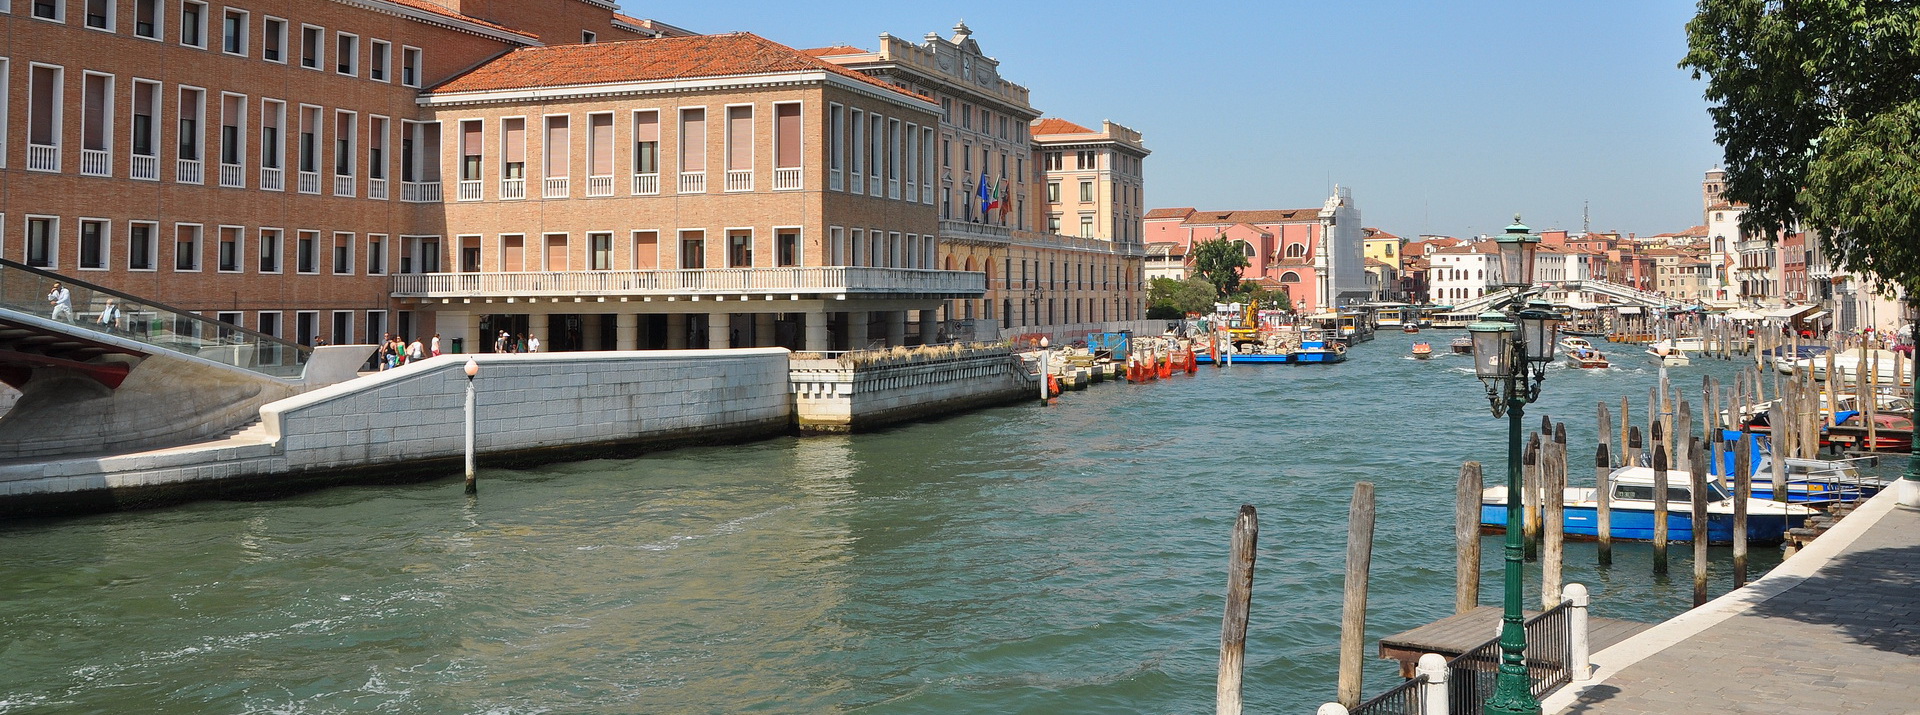 Венеция fondamenta